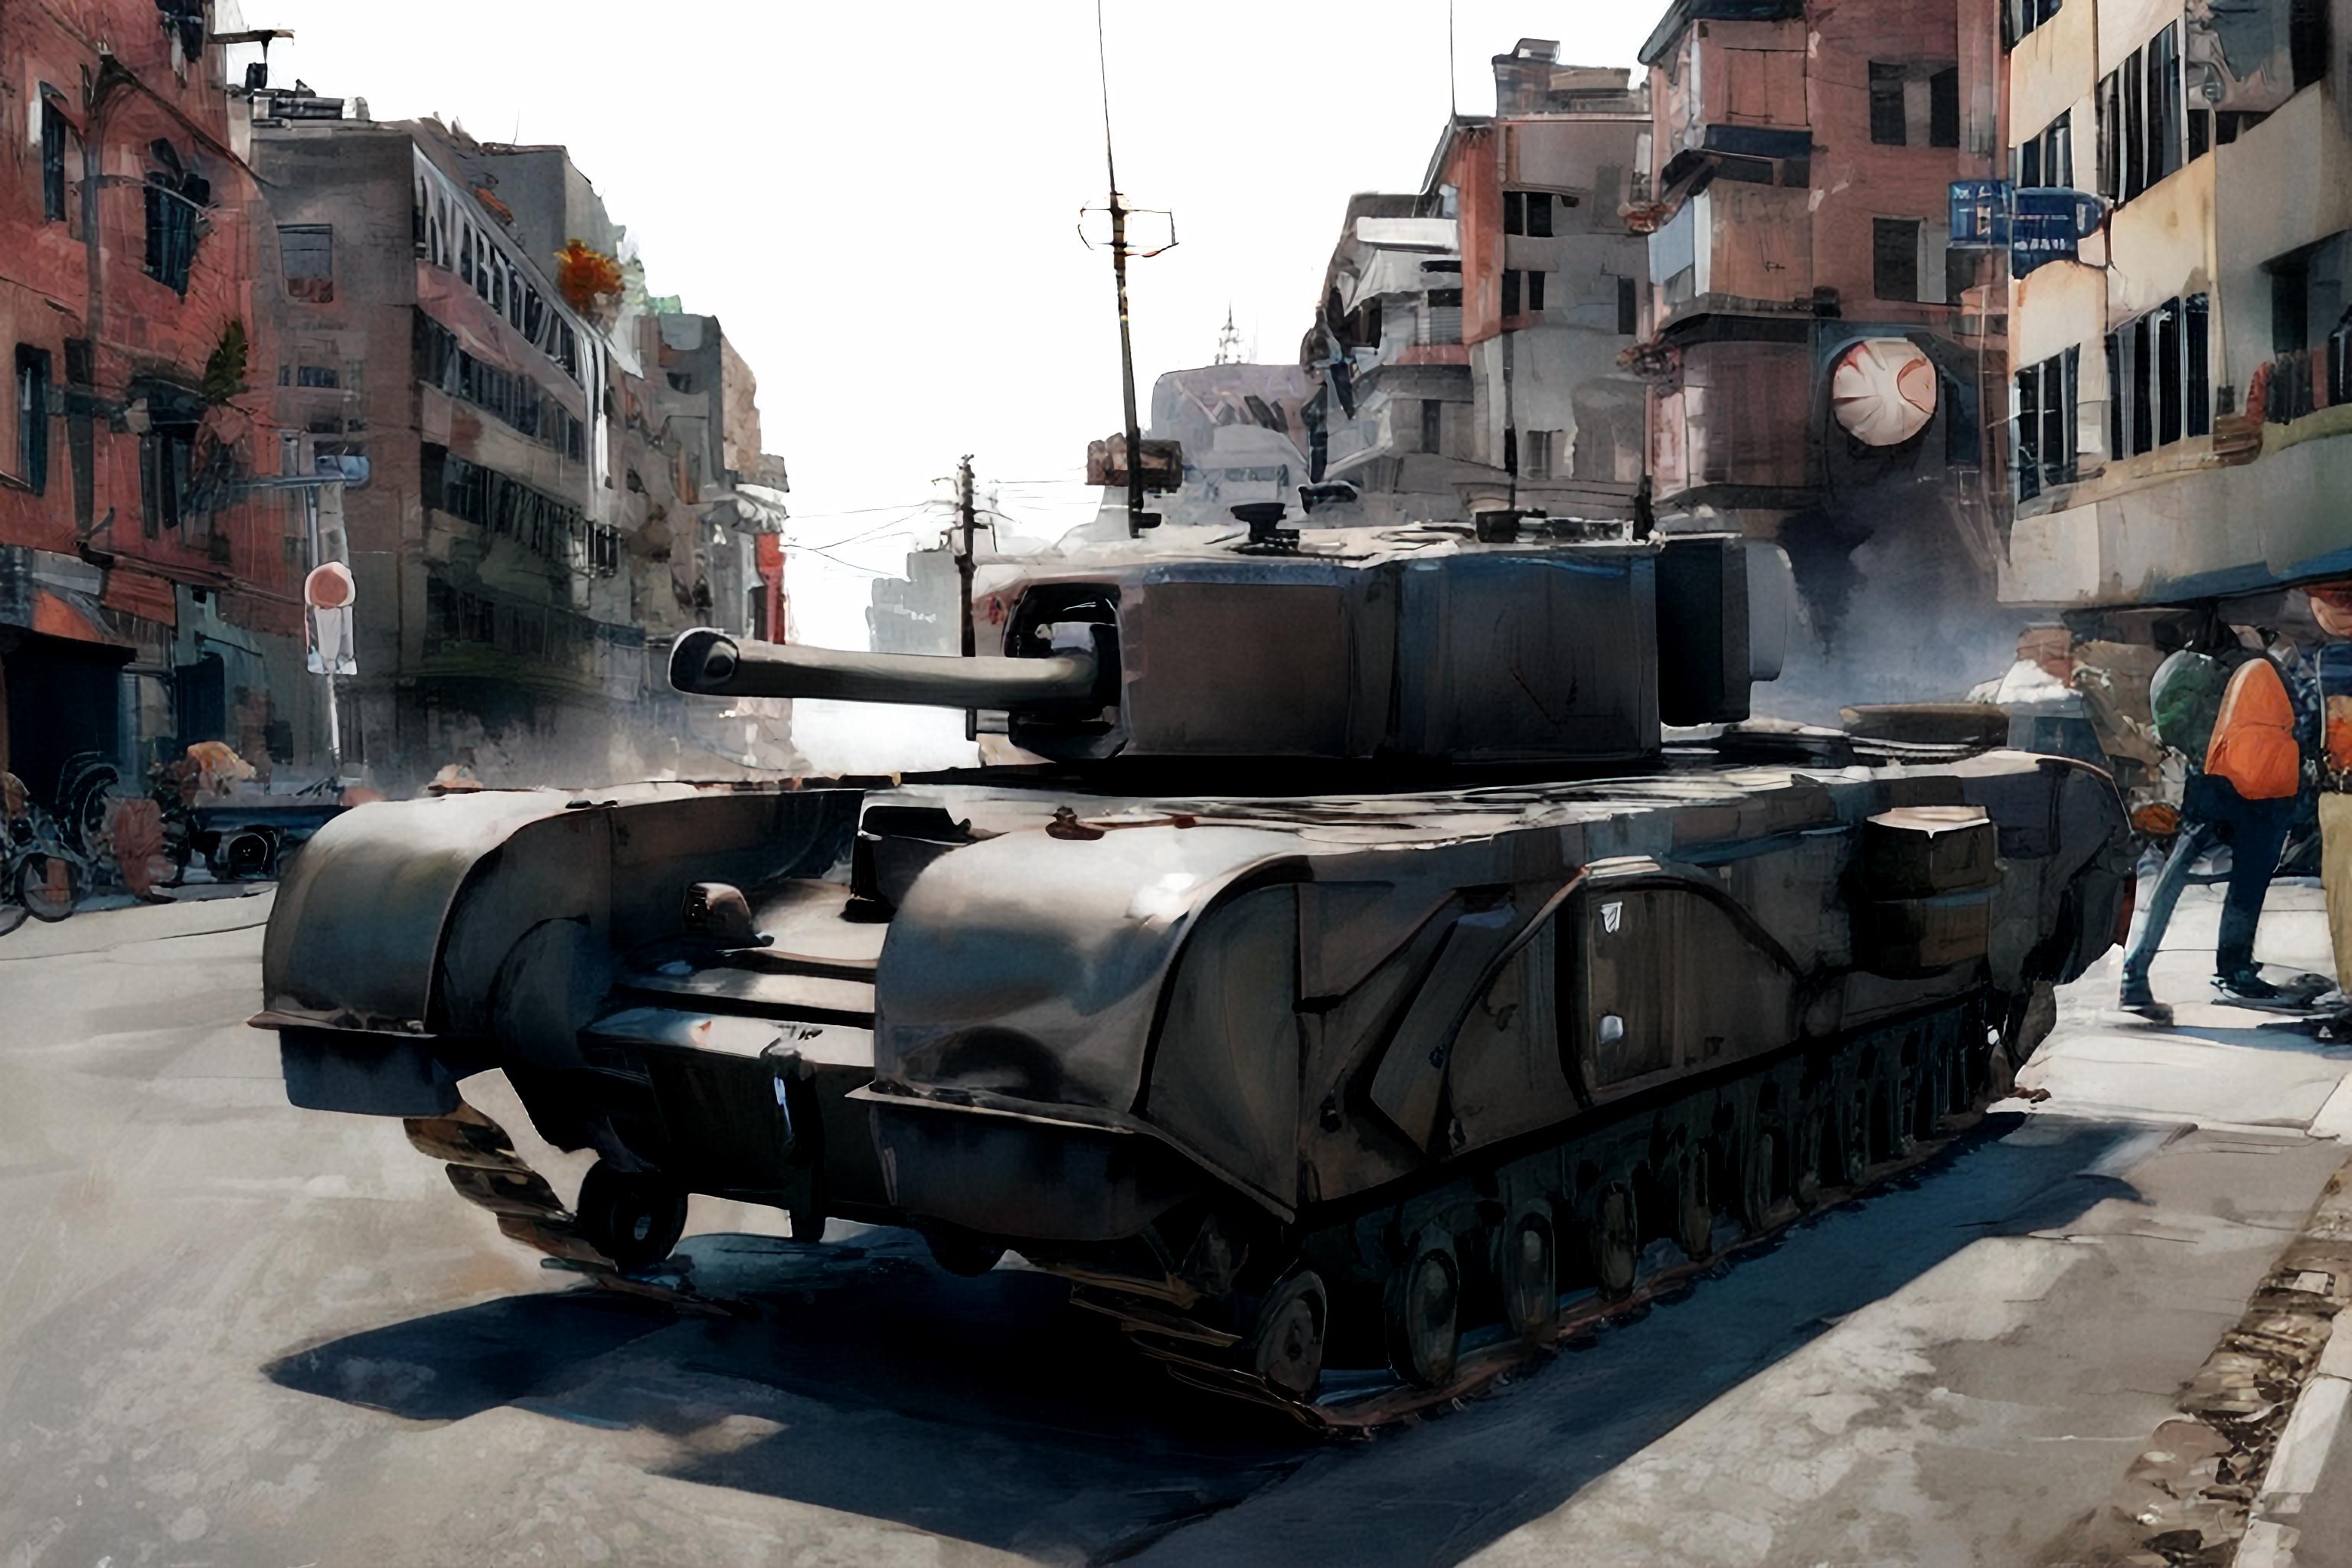 Churchill Tank image by MajMorse